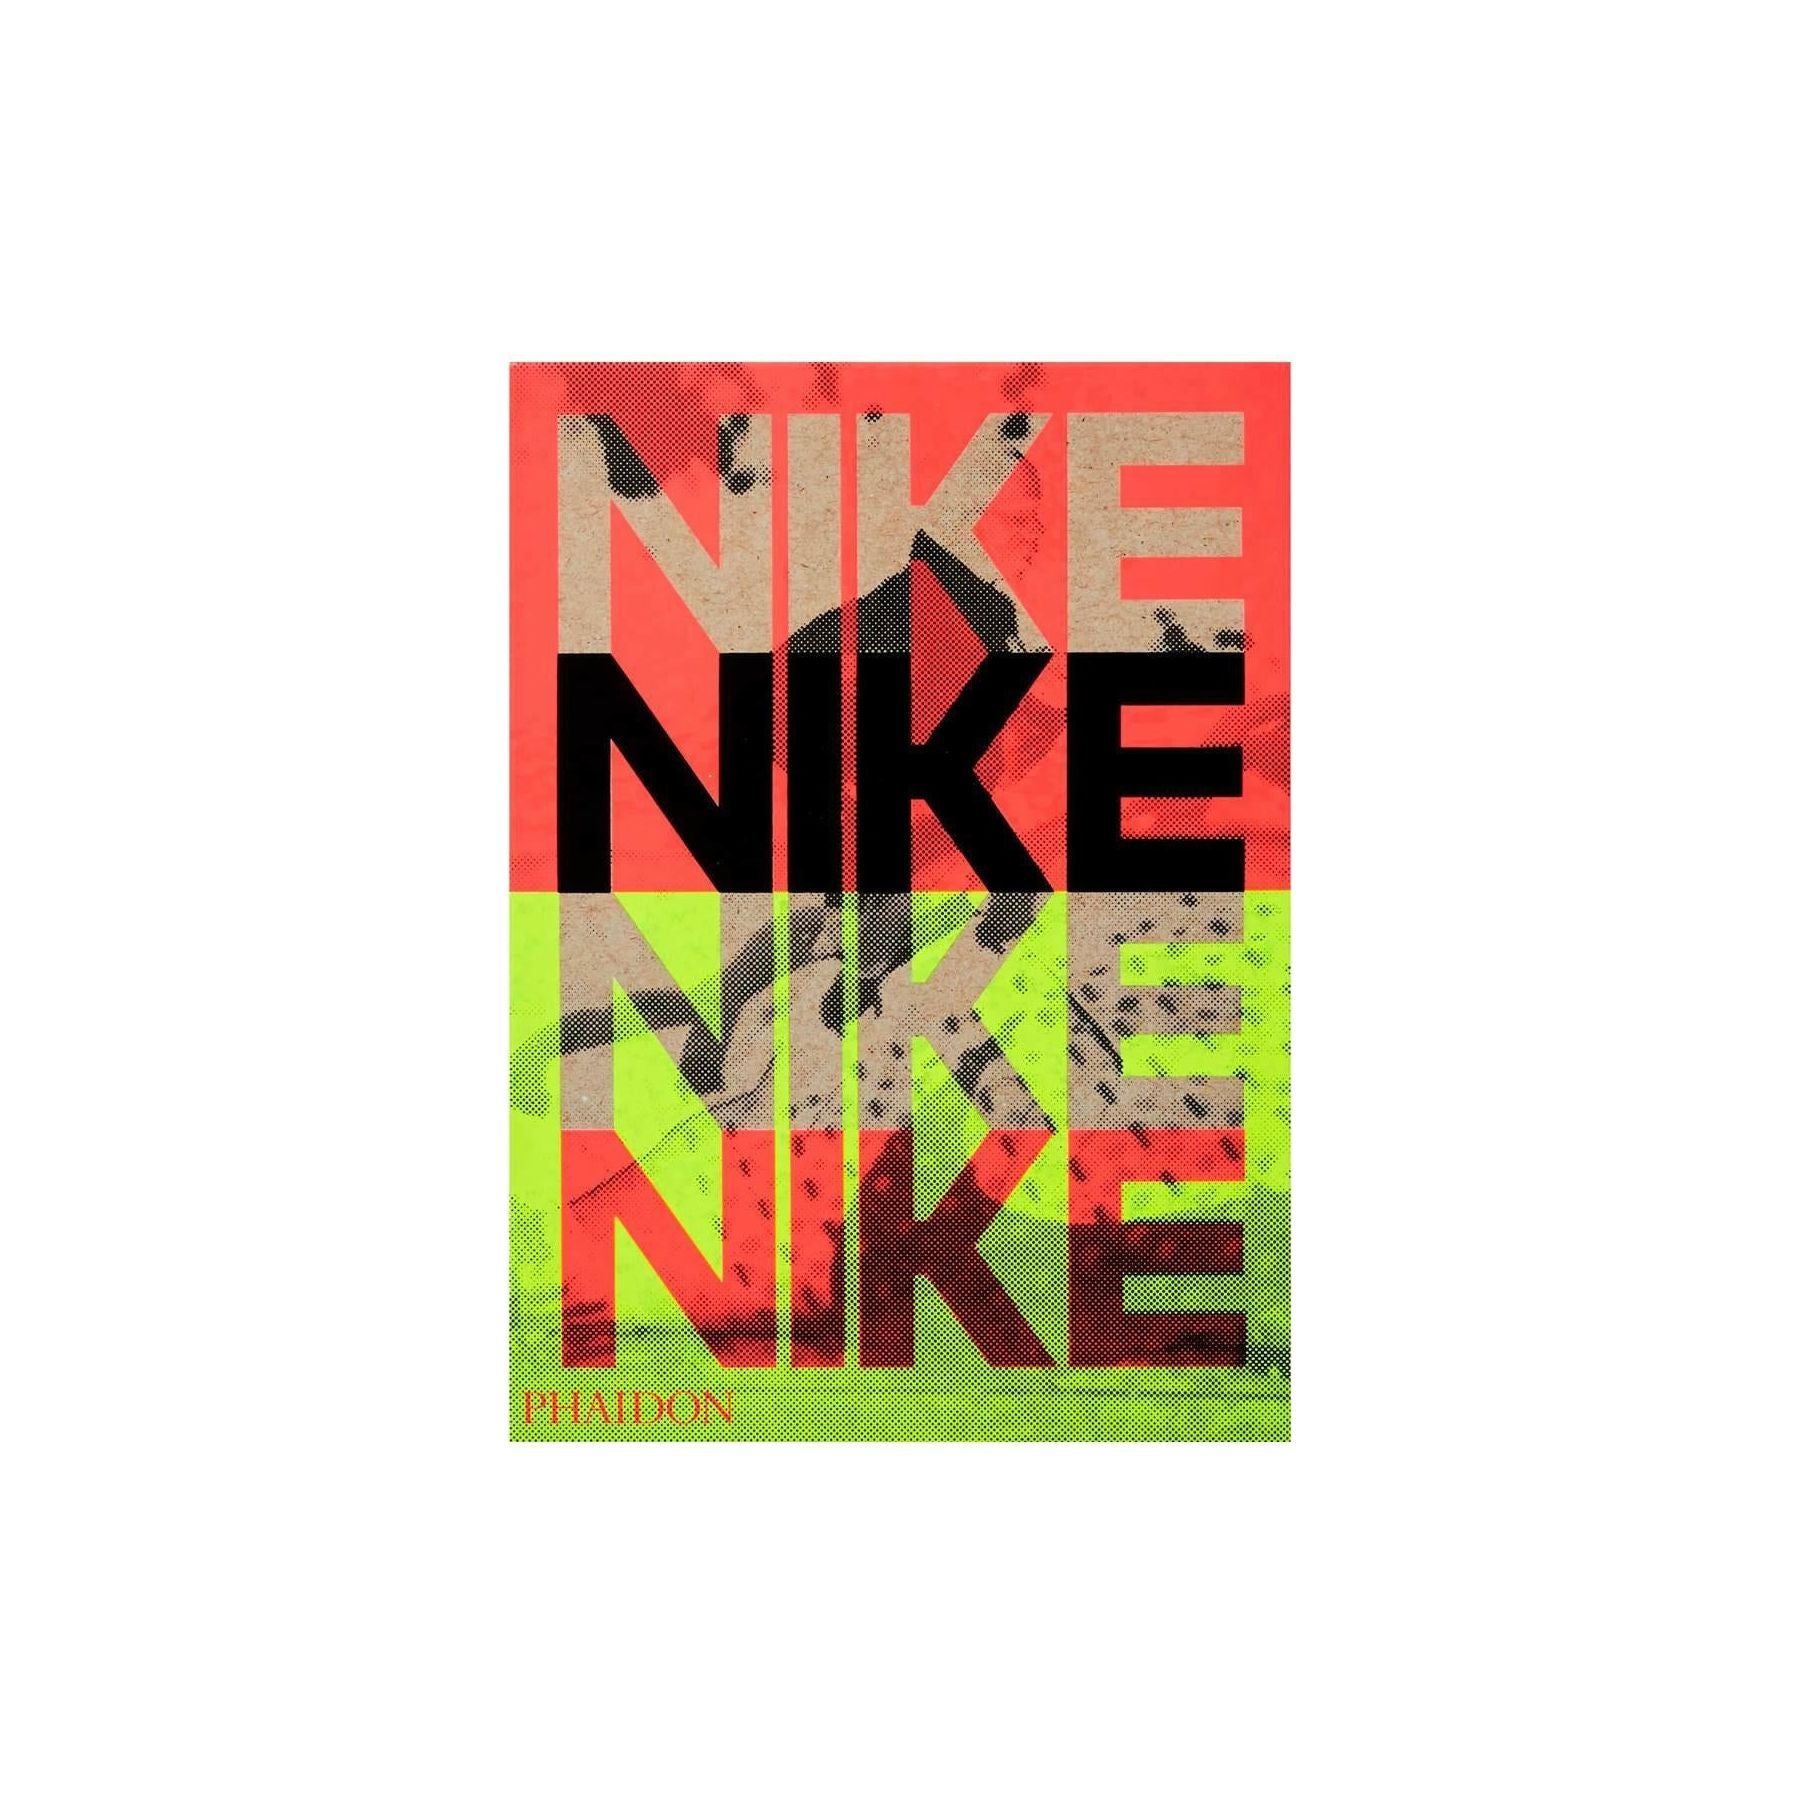 Nike: Better Is Temporary Sam Grawe NEW MAGS JOHN JULIA.